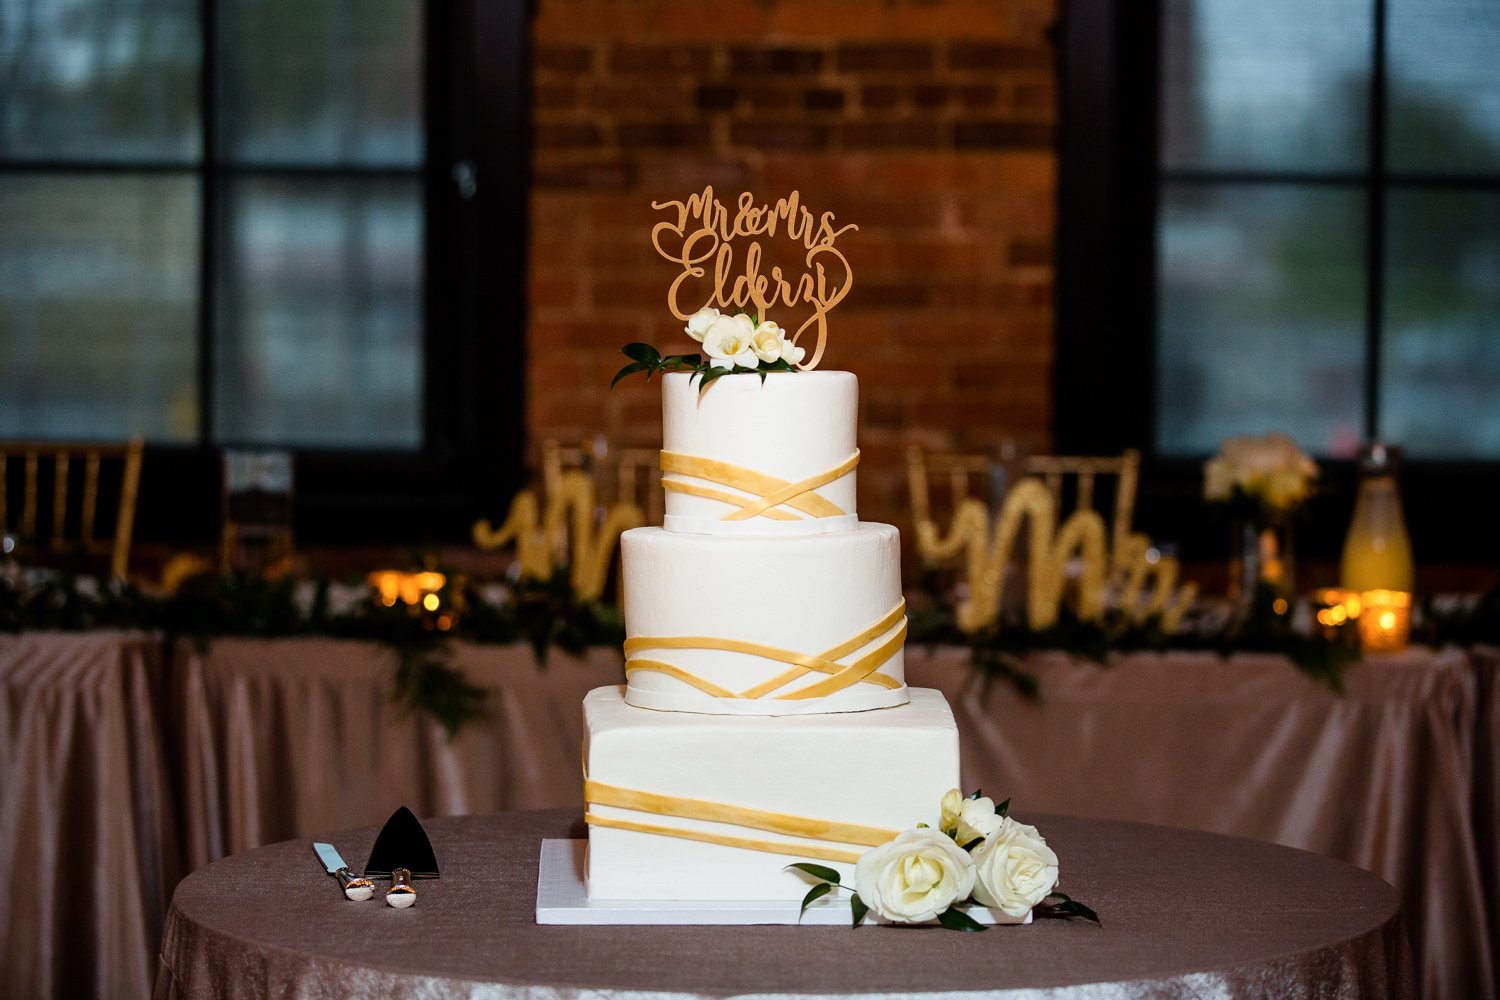 Trefzgers Wedding Cake Peoria IL